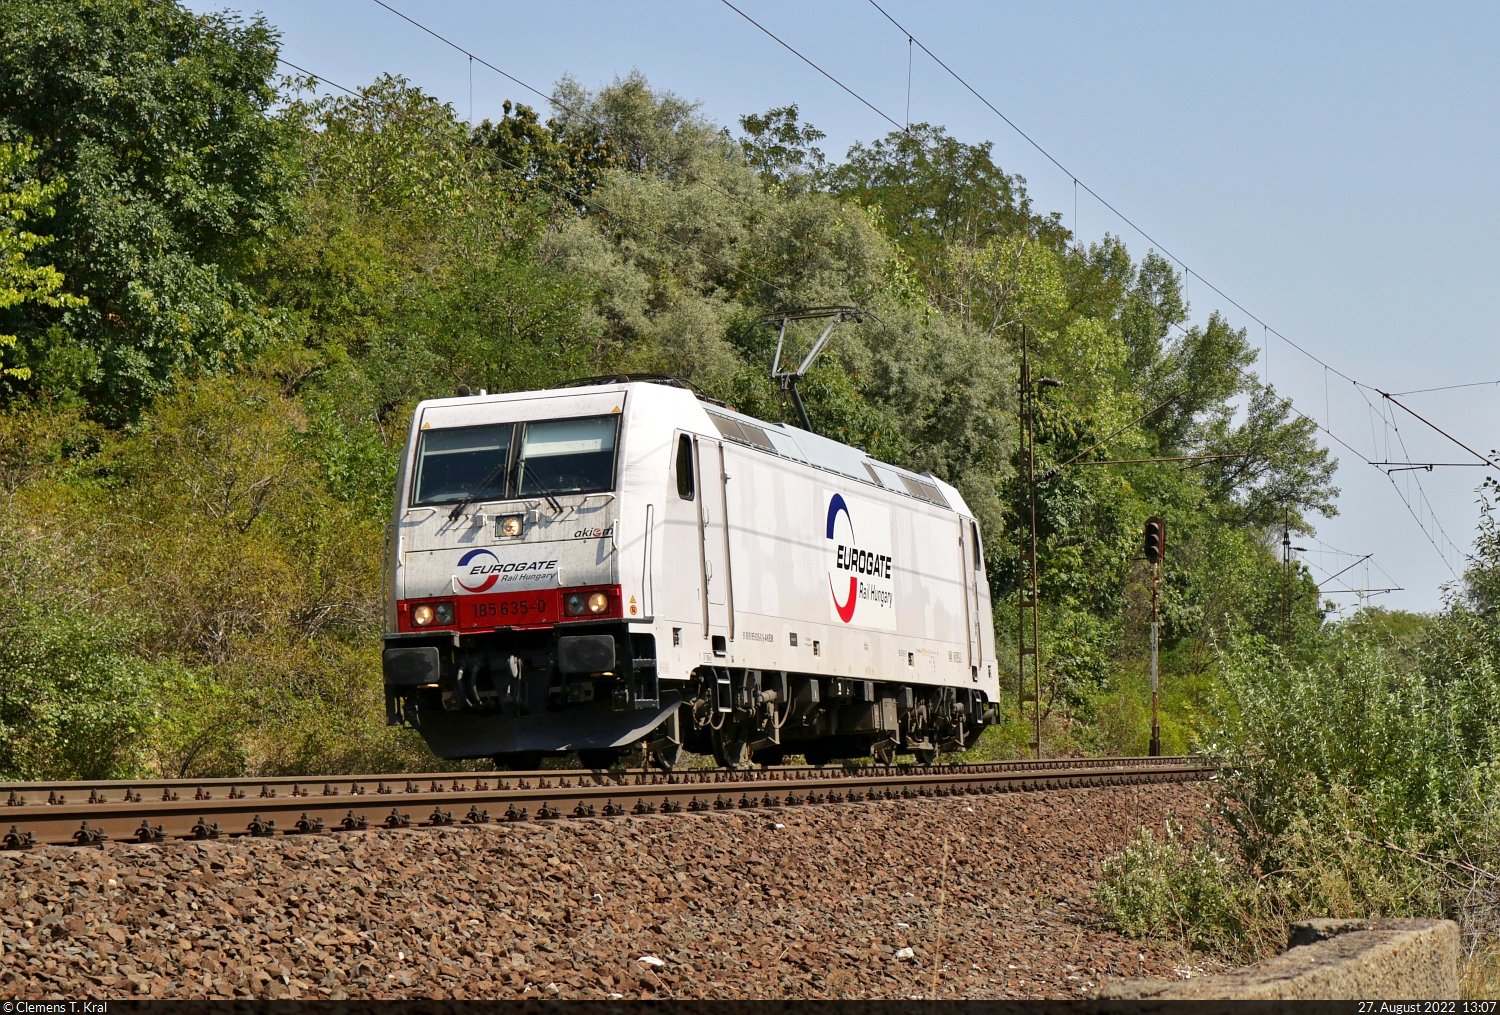 185 635-0 auf Solofahrt bei Szár (HU) Richtung Tatabánya (HU).

🧰 Akiem S.A.S., vermietet an EUROGATE Rail Hungary Zrt. (ERH)
🕓 27.8.2022 | 13:07 Uhr